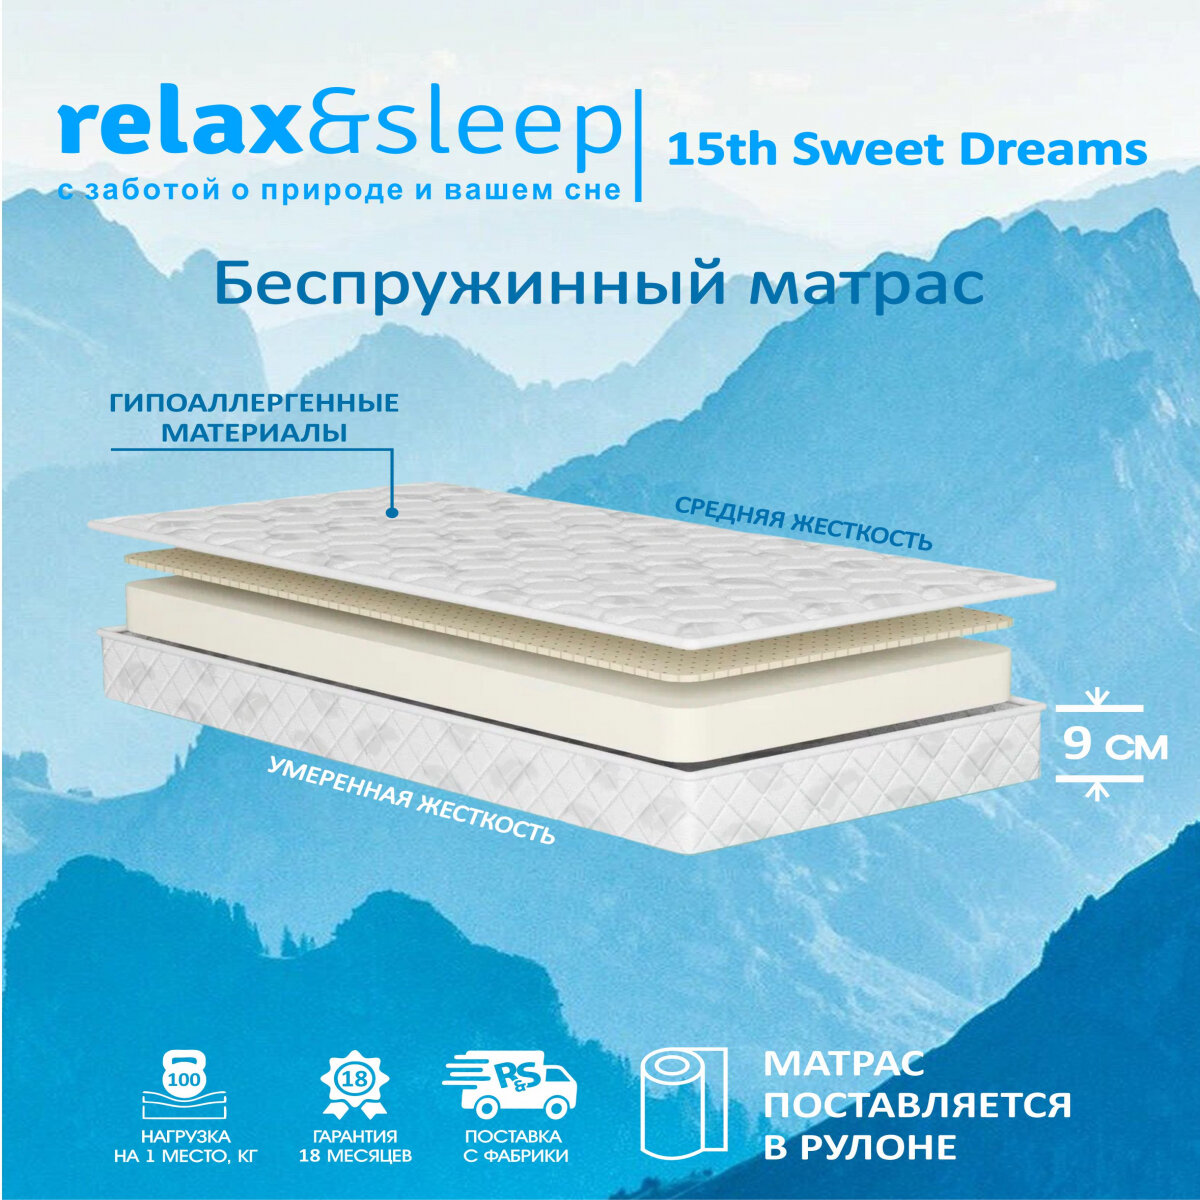 Матрас Relax&Sleep ортопедический беспружинный 15th Sweet Dreams (60 / 195)